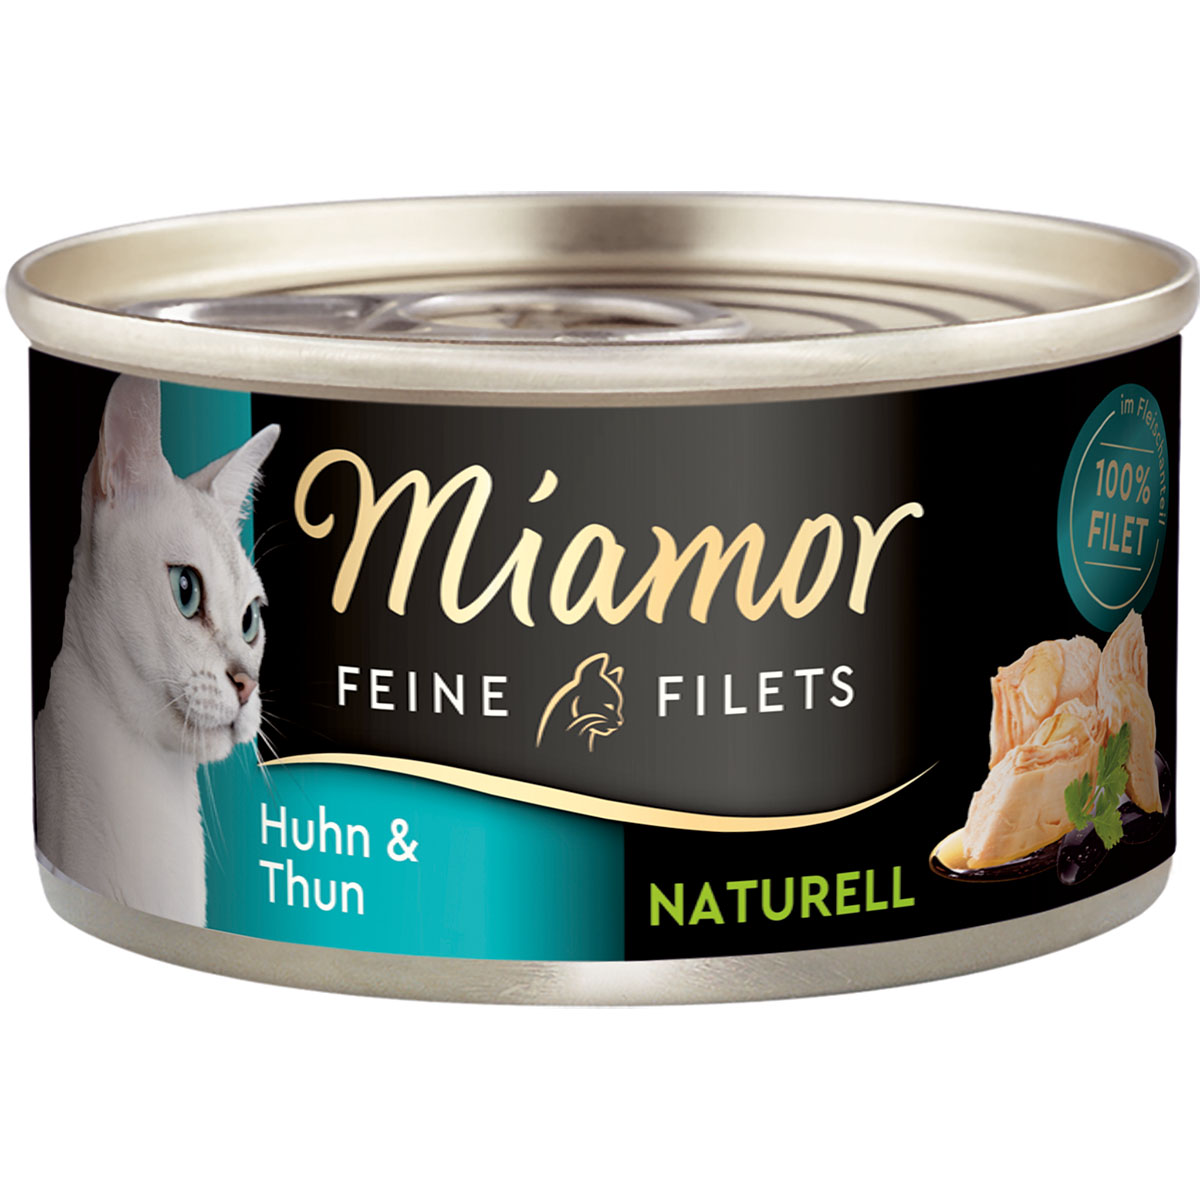 Miamor Feine Filets Naturelle, kuřecí maso a tuňák, 80g plechovka